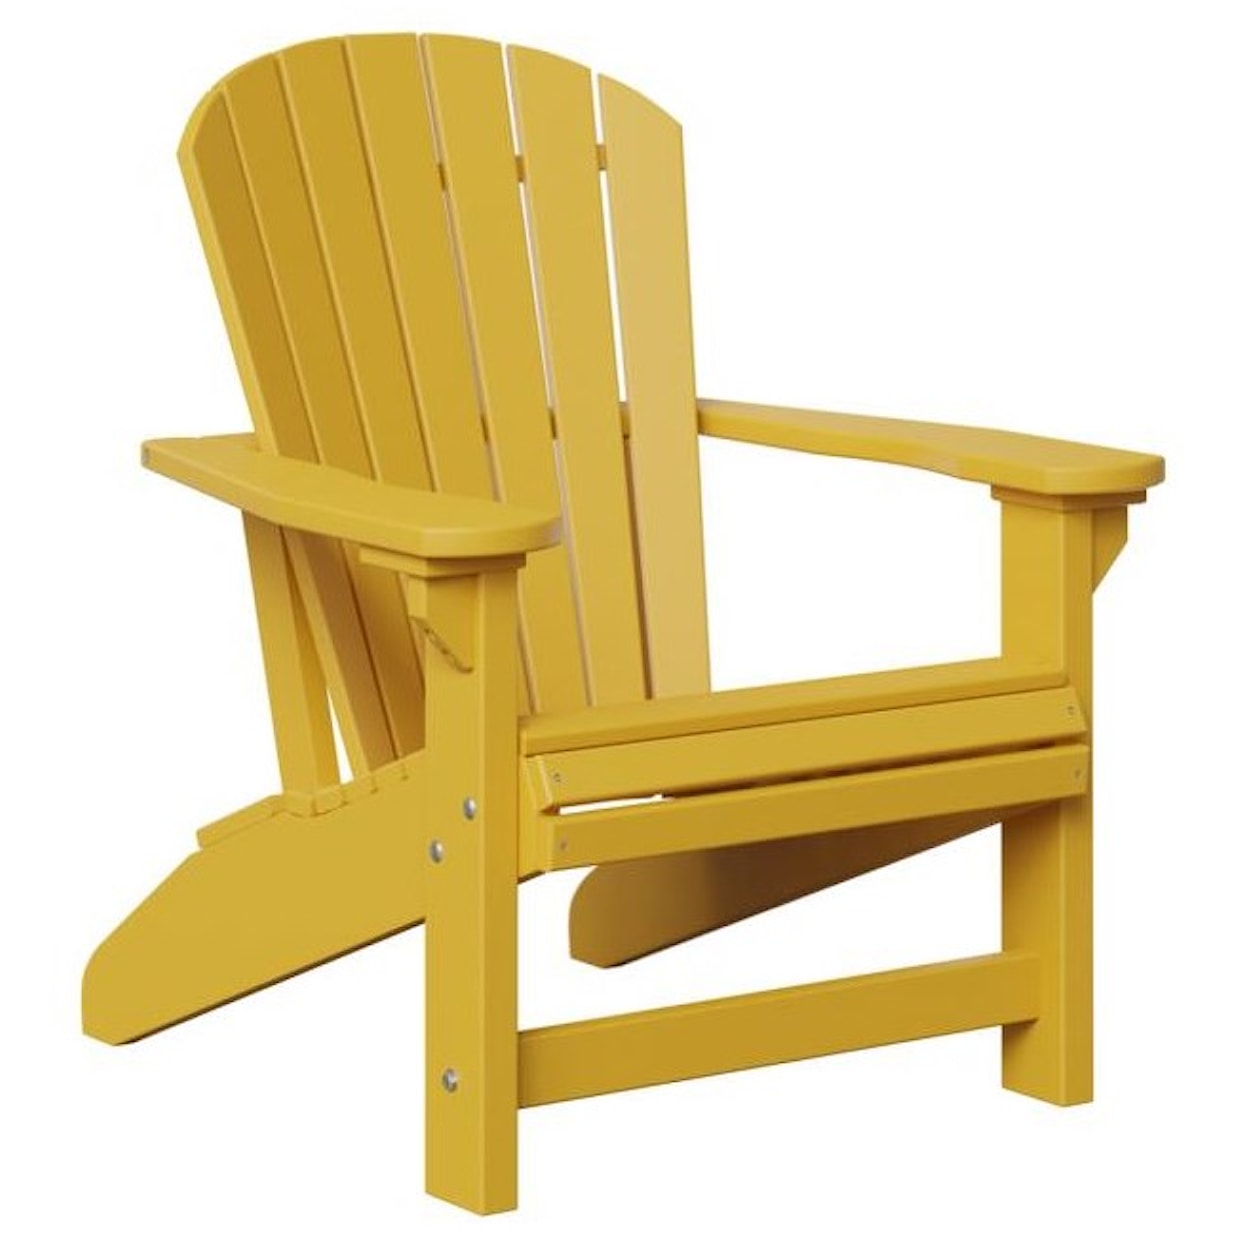 Amish Country Classic Adirondack Chair